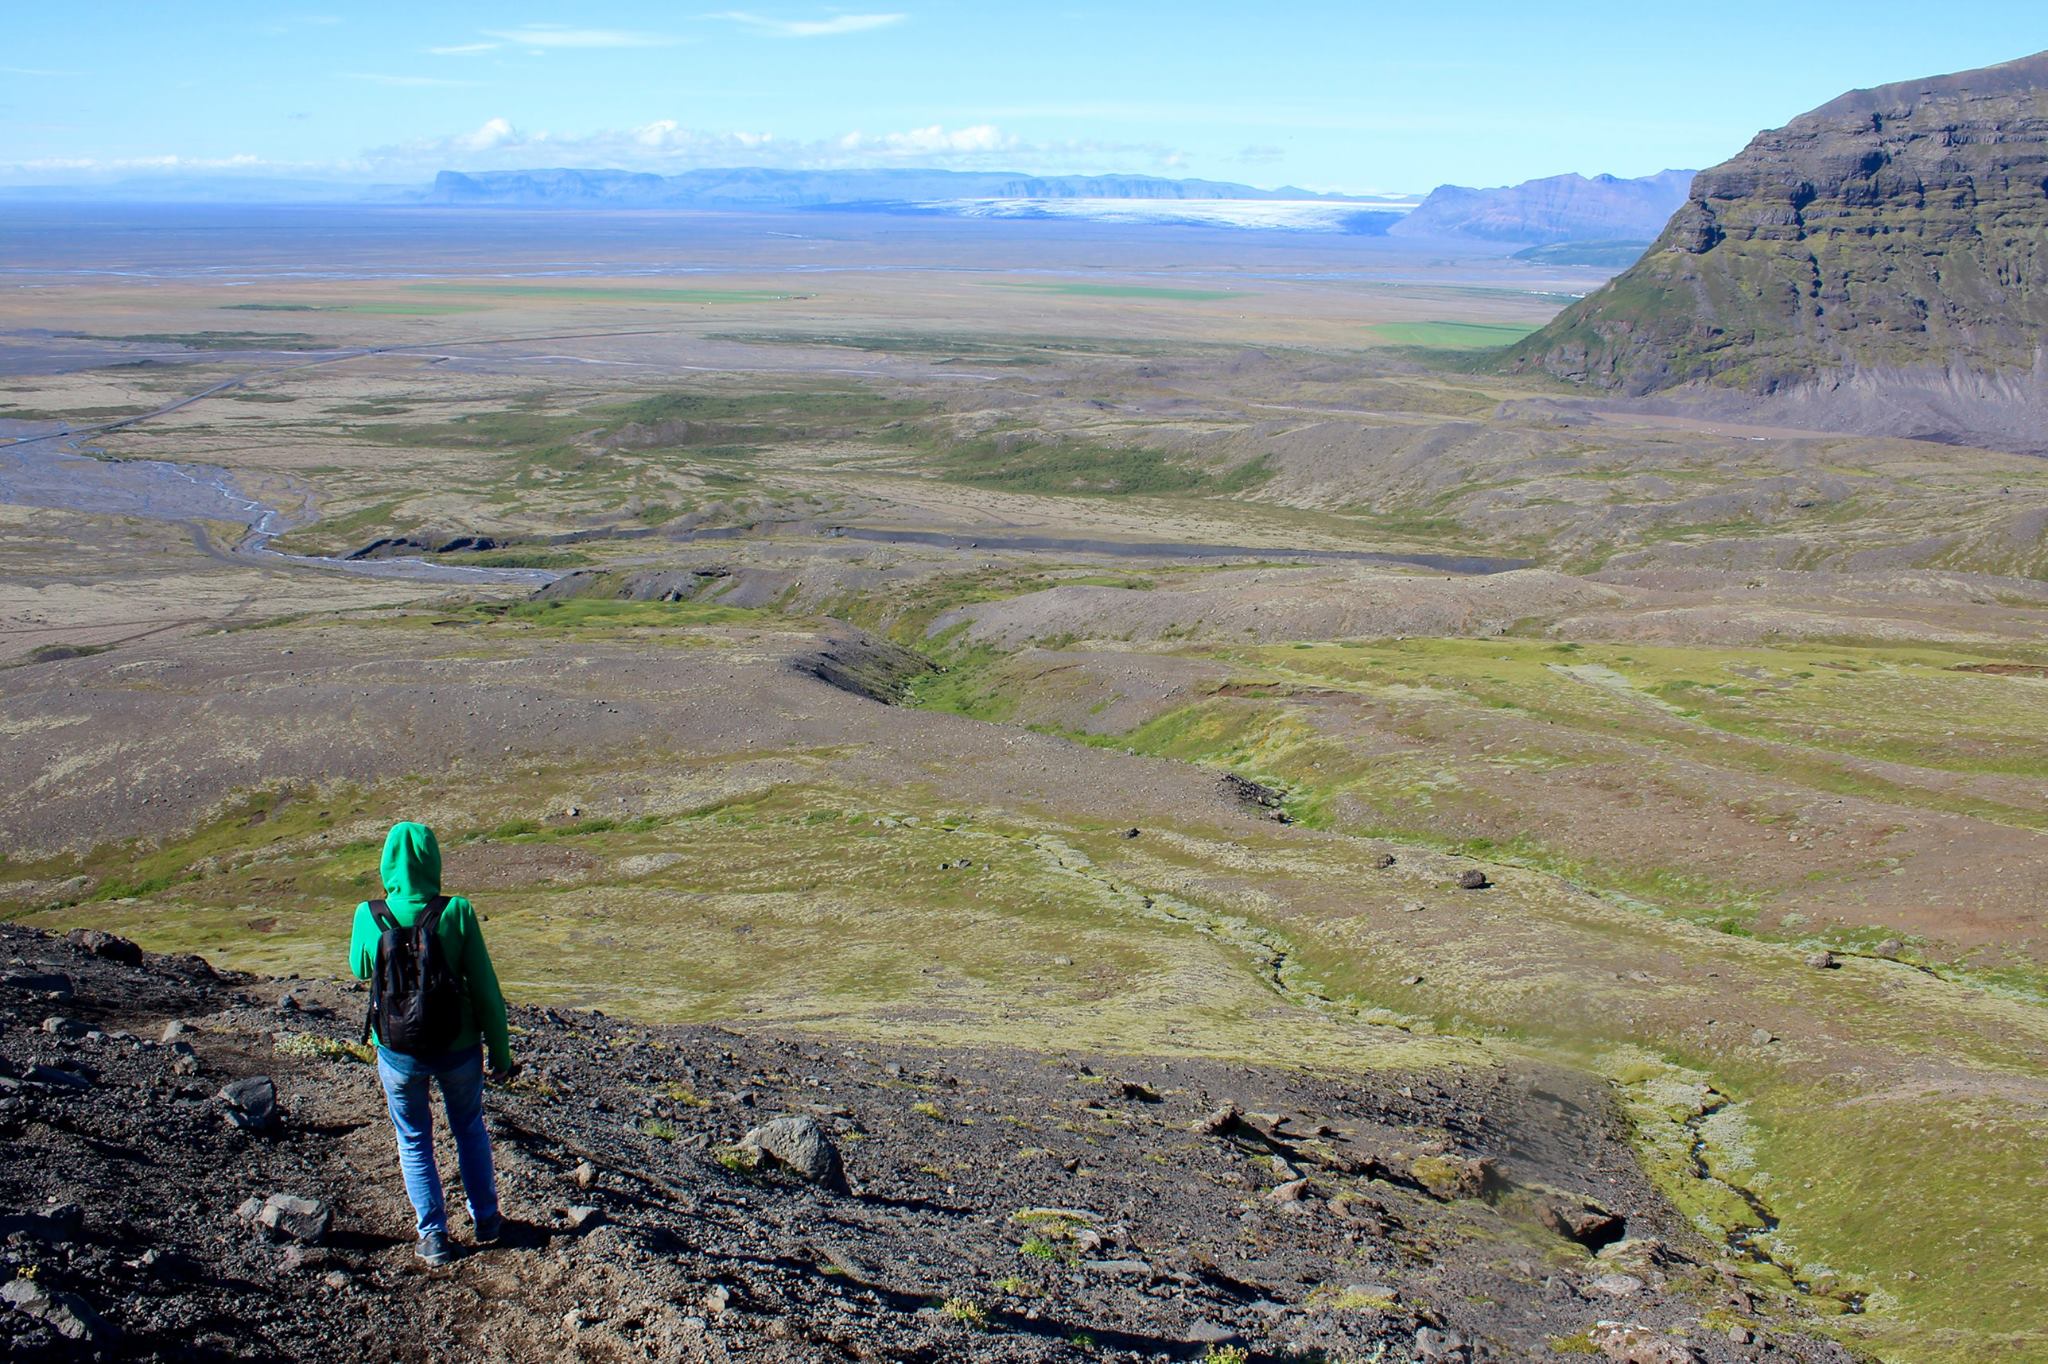 View of the terrain and glacier near Skaftafell national park from Hvannadalshnúkur peak